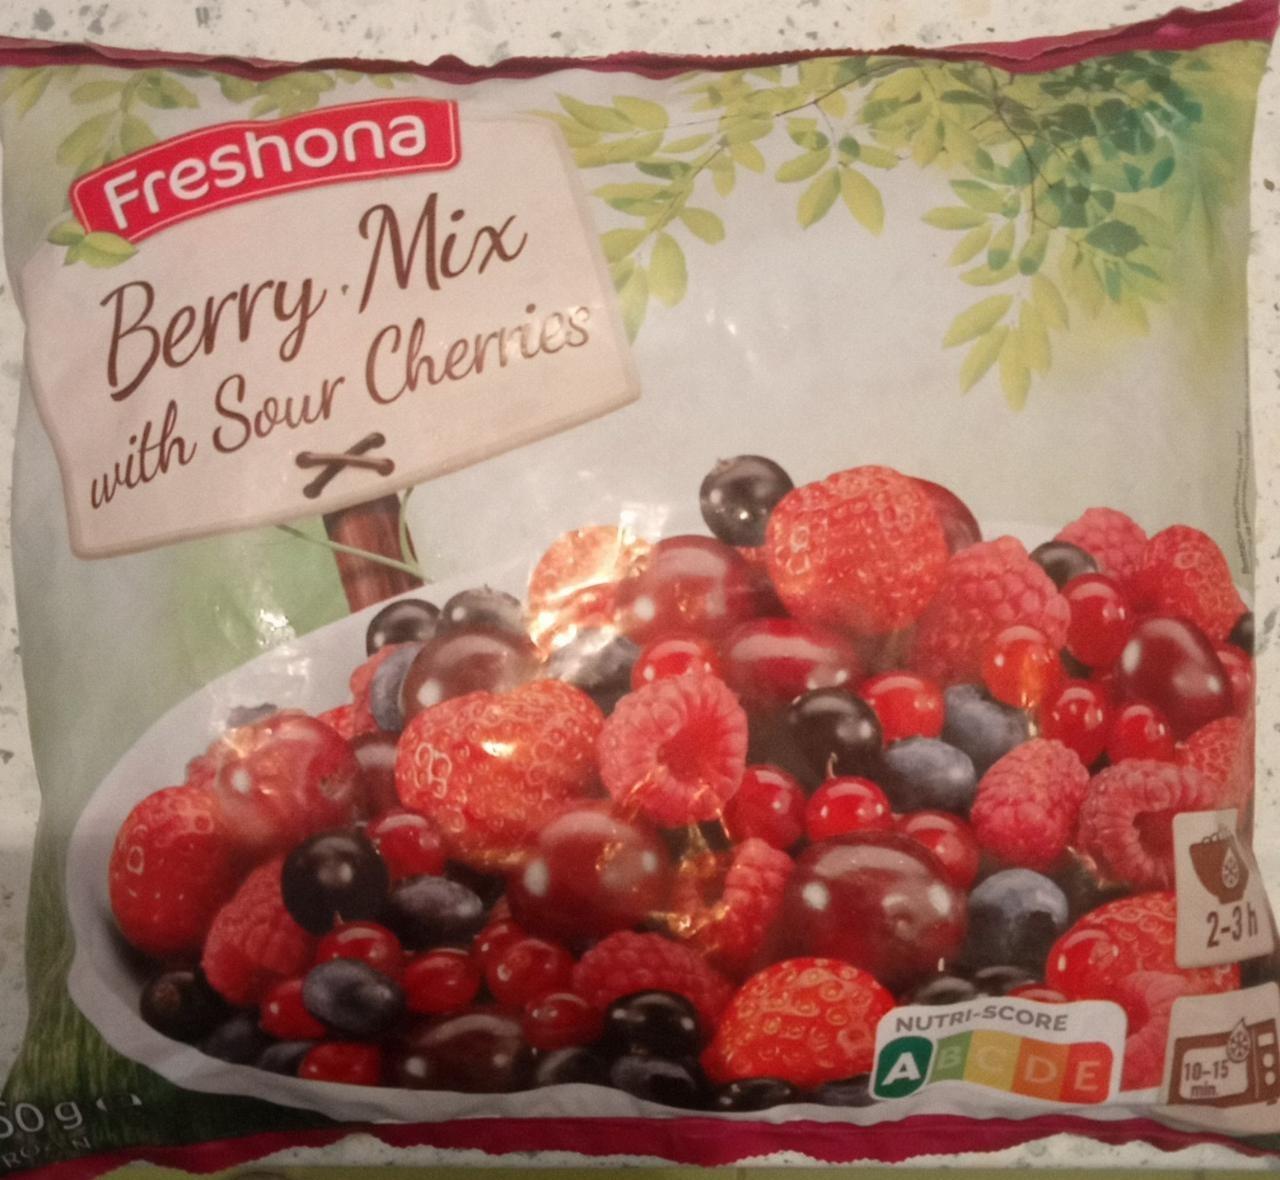 Képek - Berry mix with sour cherries Freshona